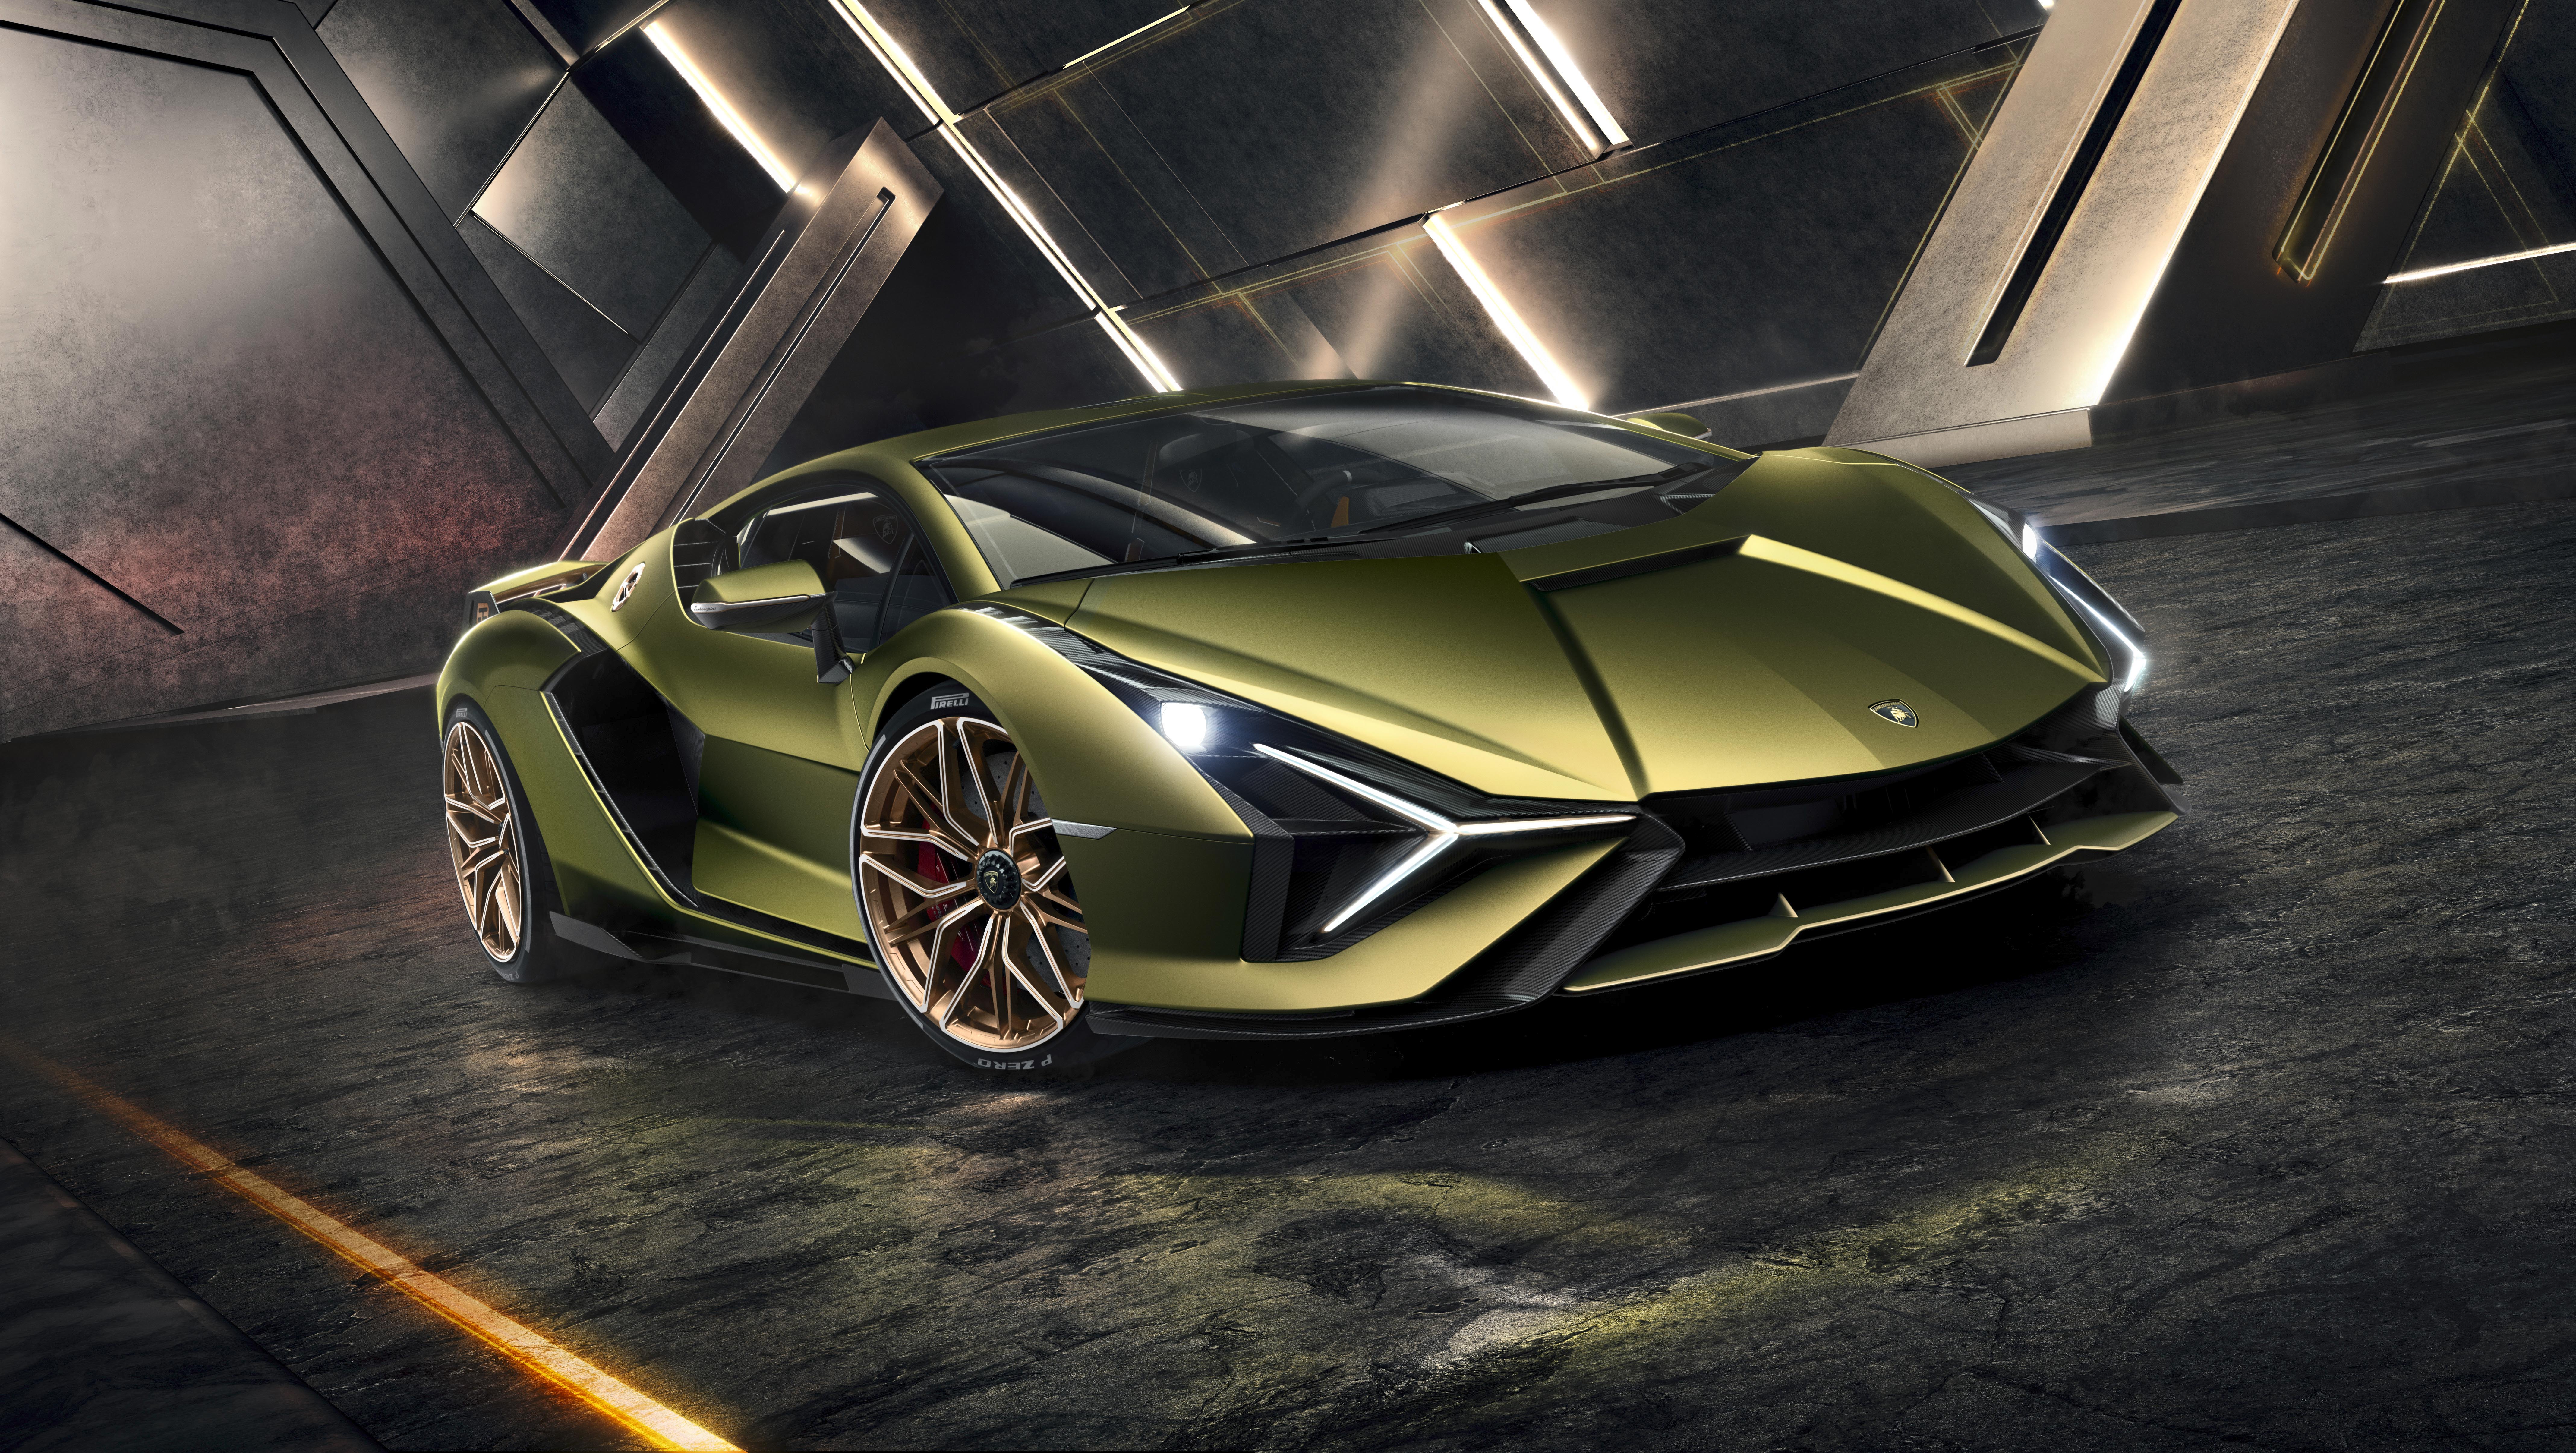 7680x4320 Lamborghini Sian 2019 Front View 8k Hd 4k Wallpapers Images